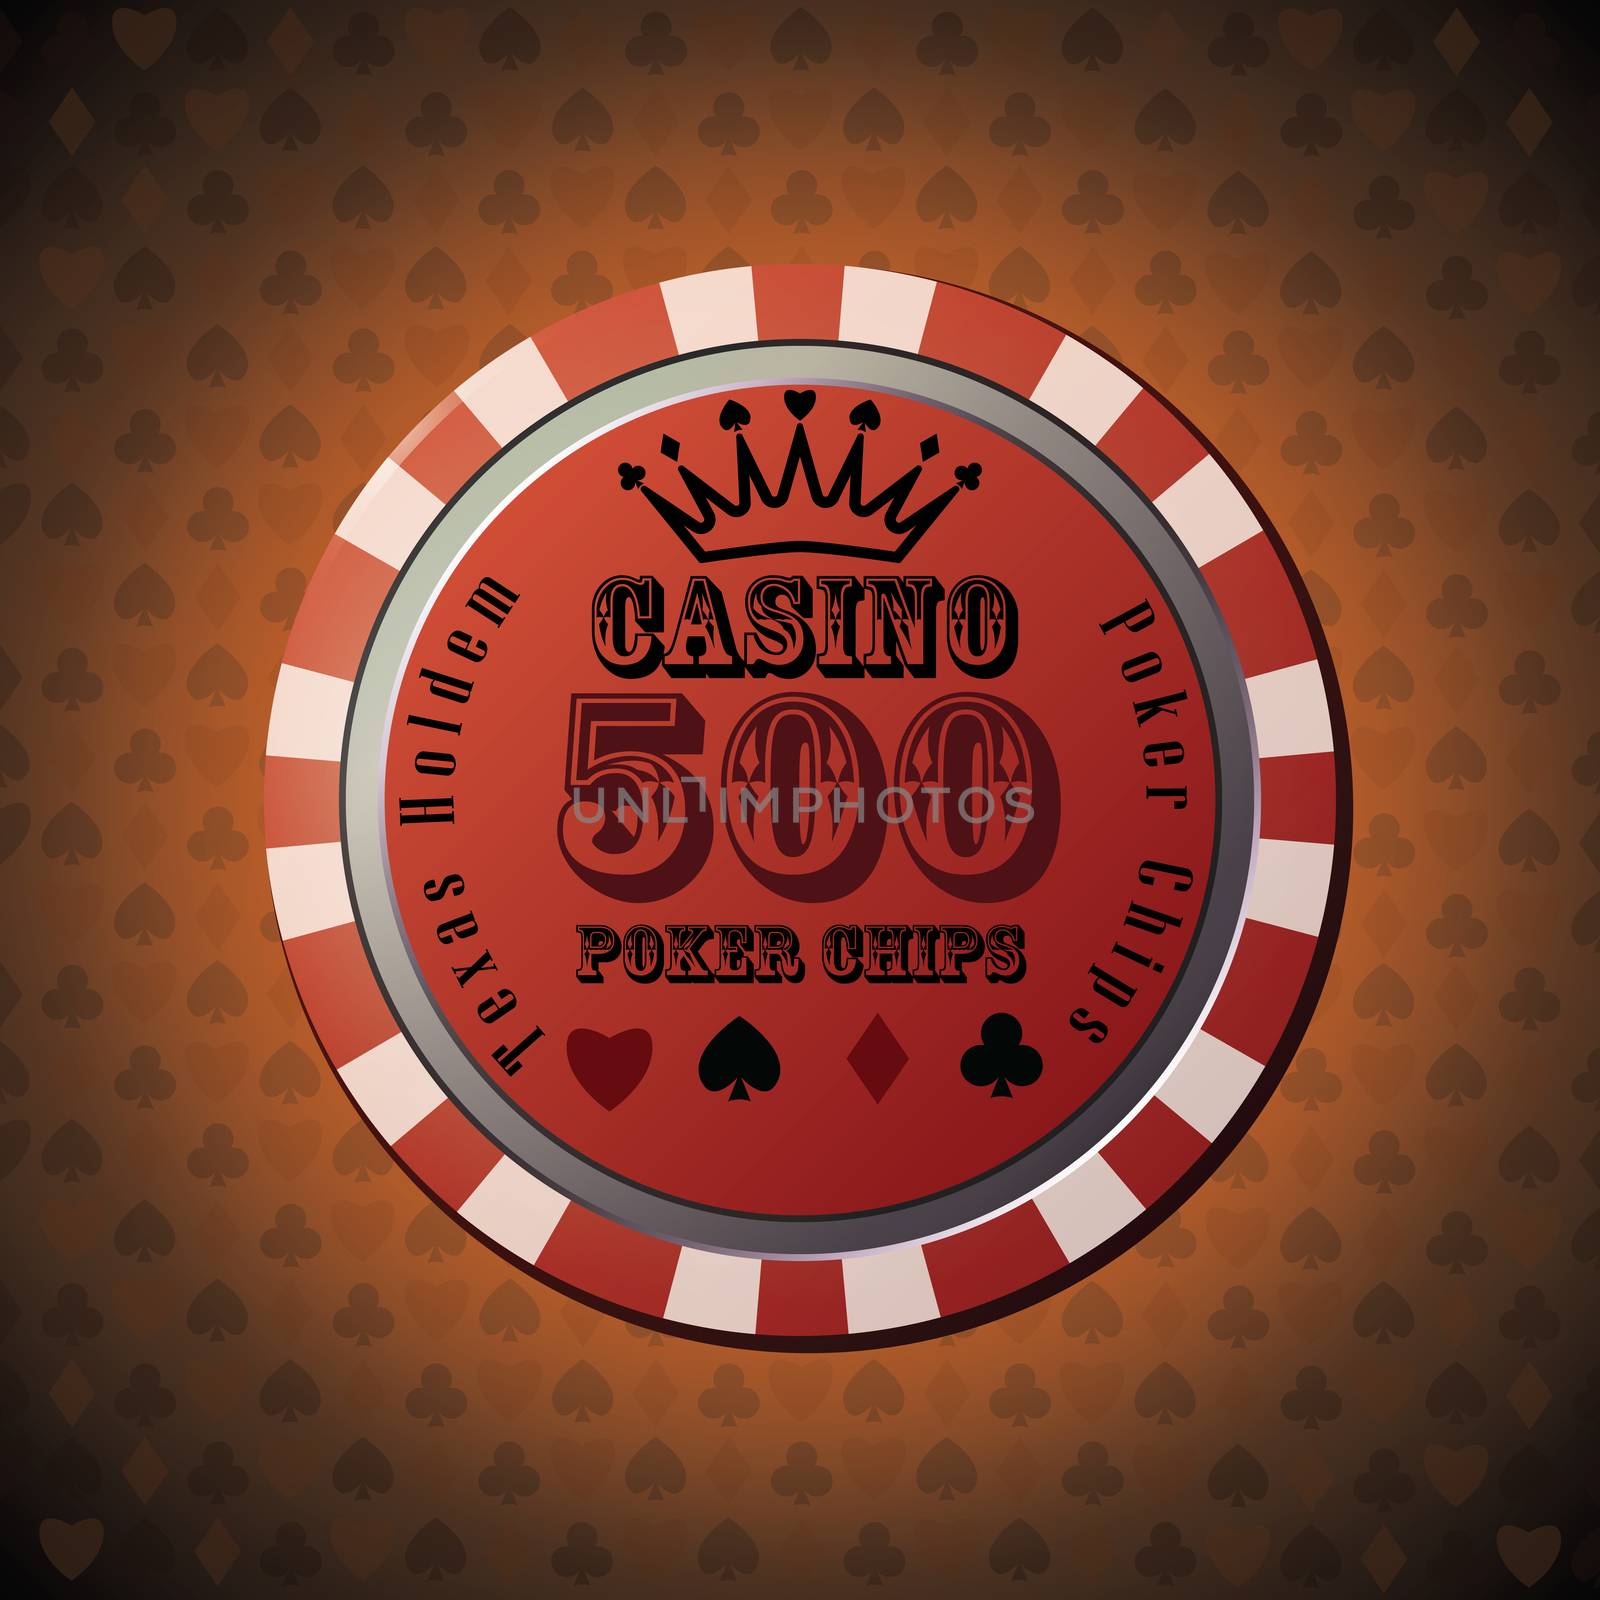 Poker chip 500 on orange background